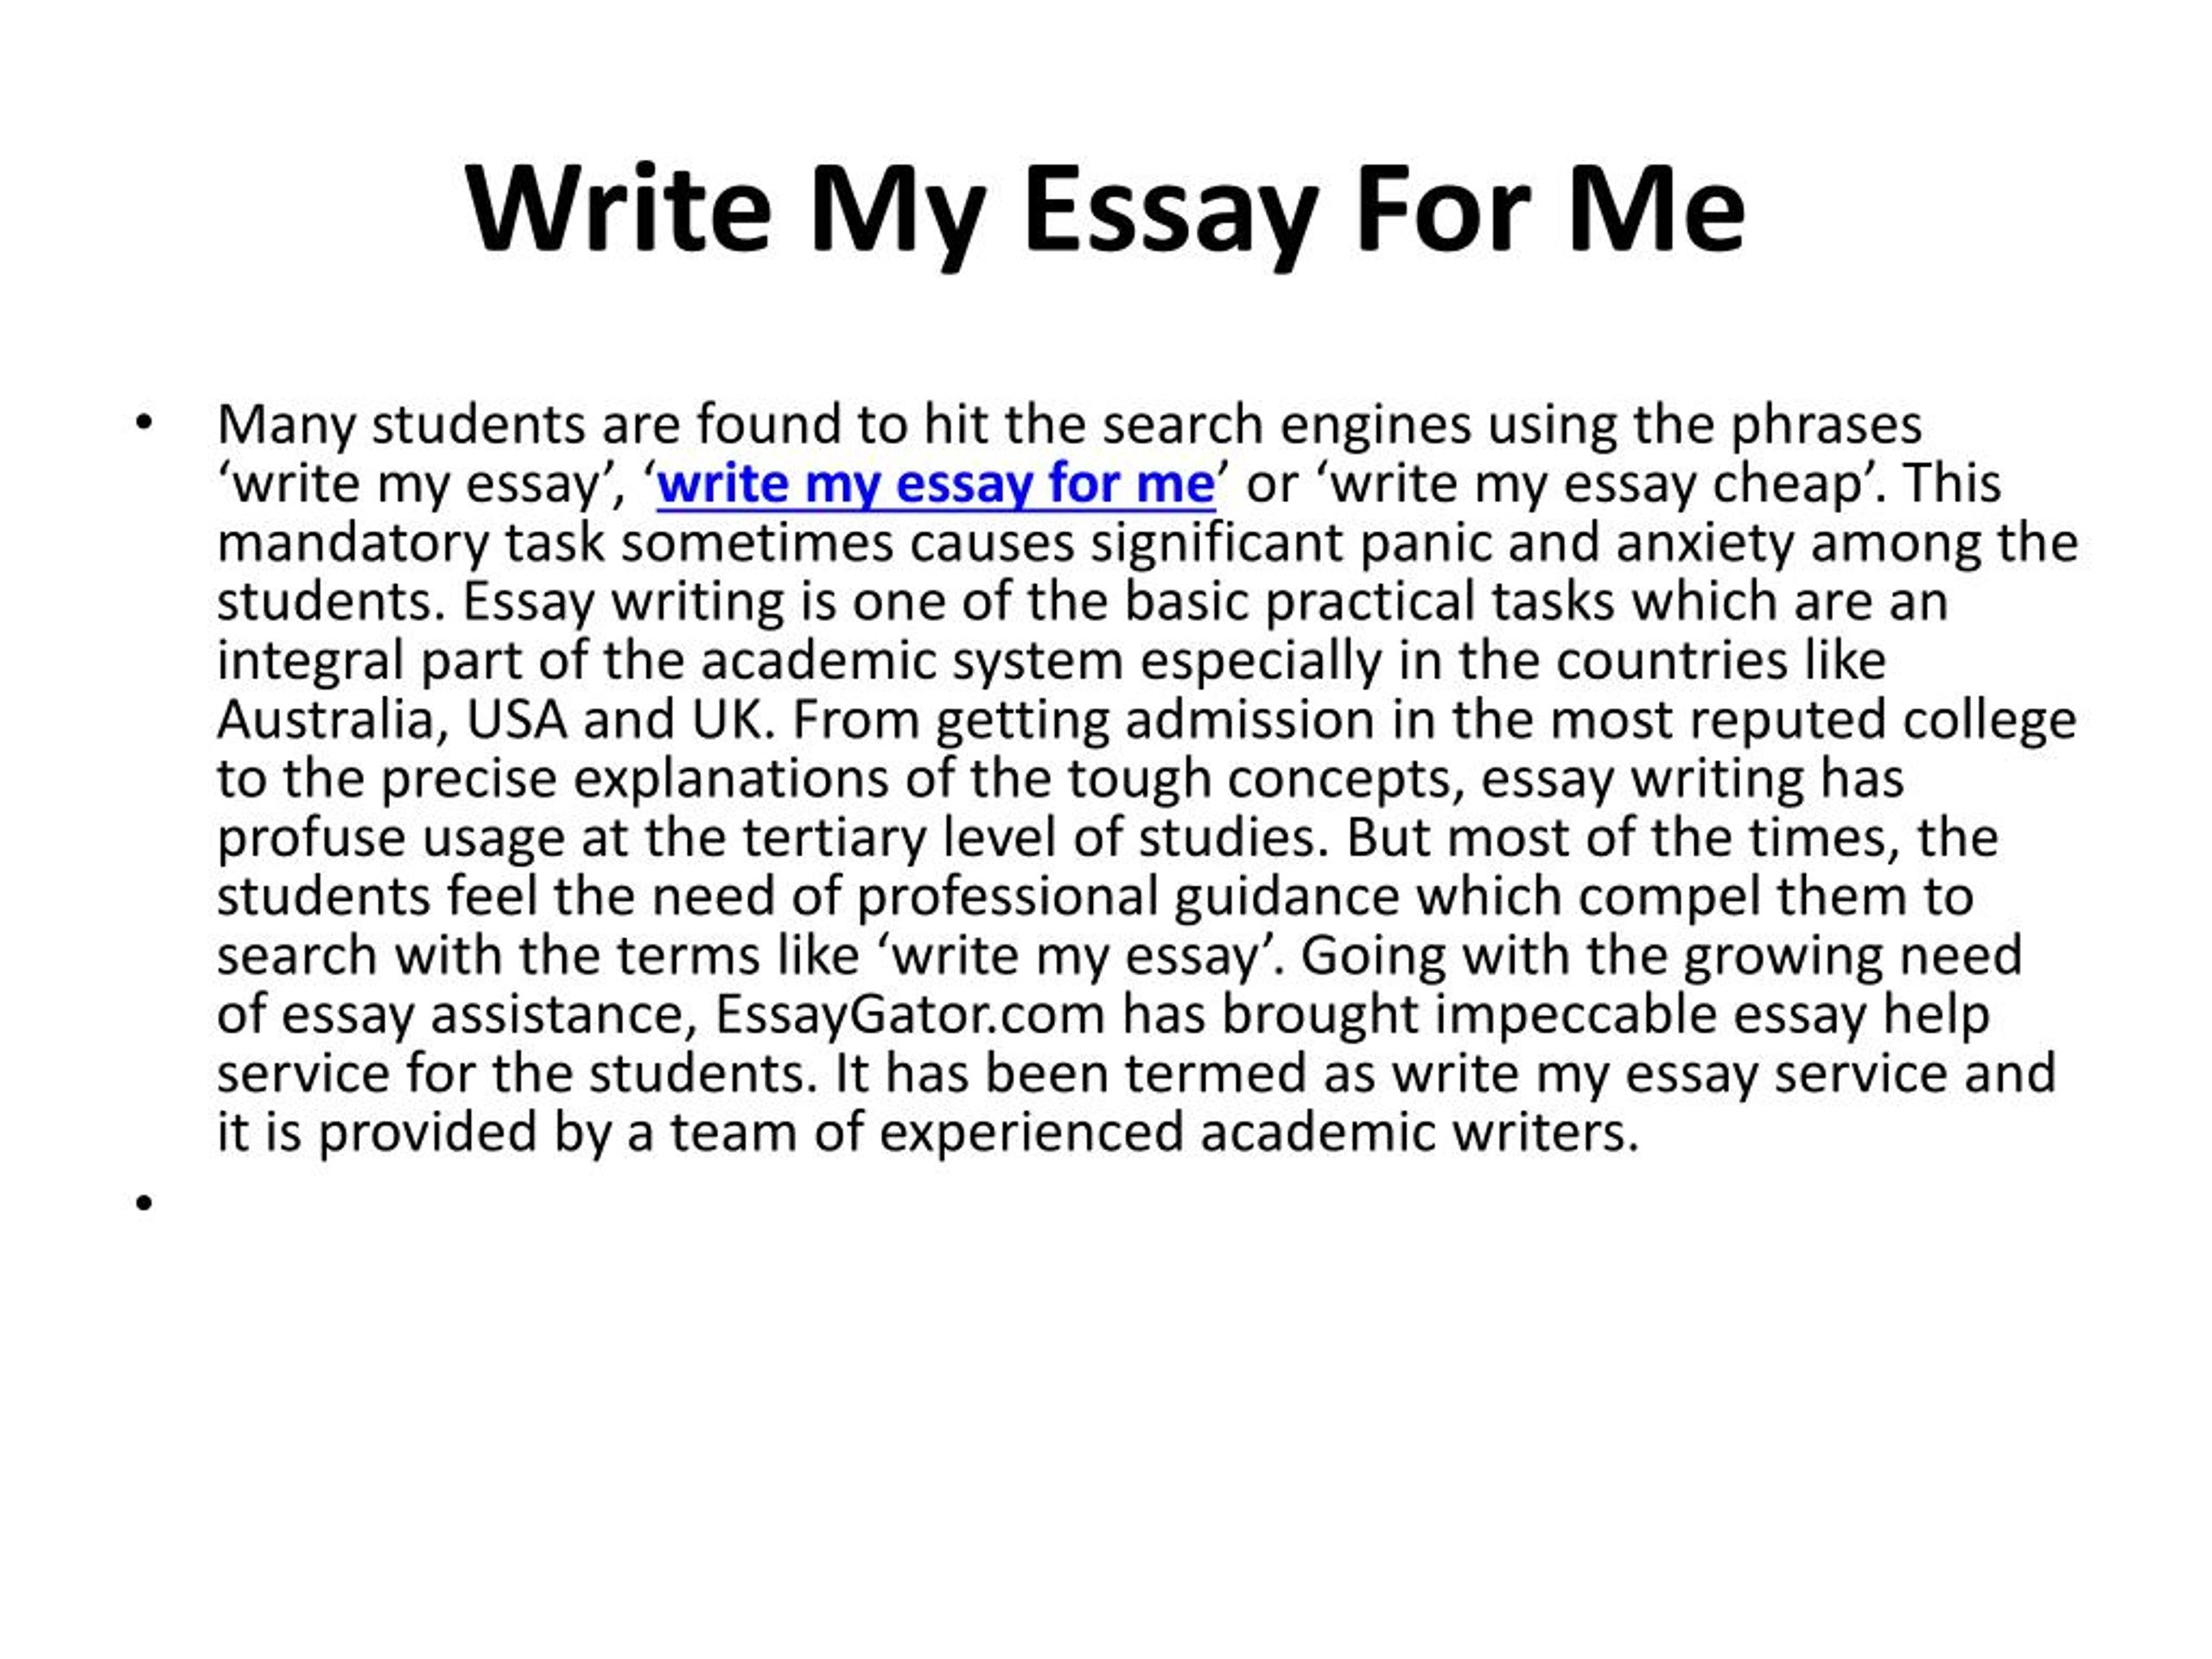 Ayn rand institute essay scholarship